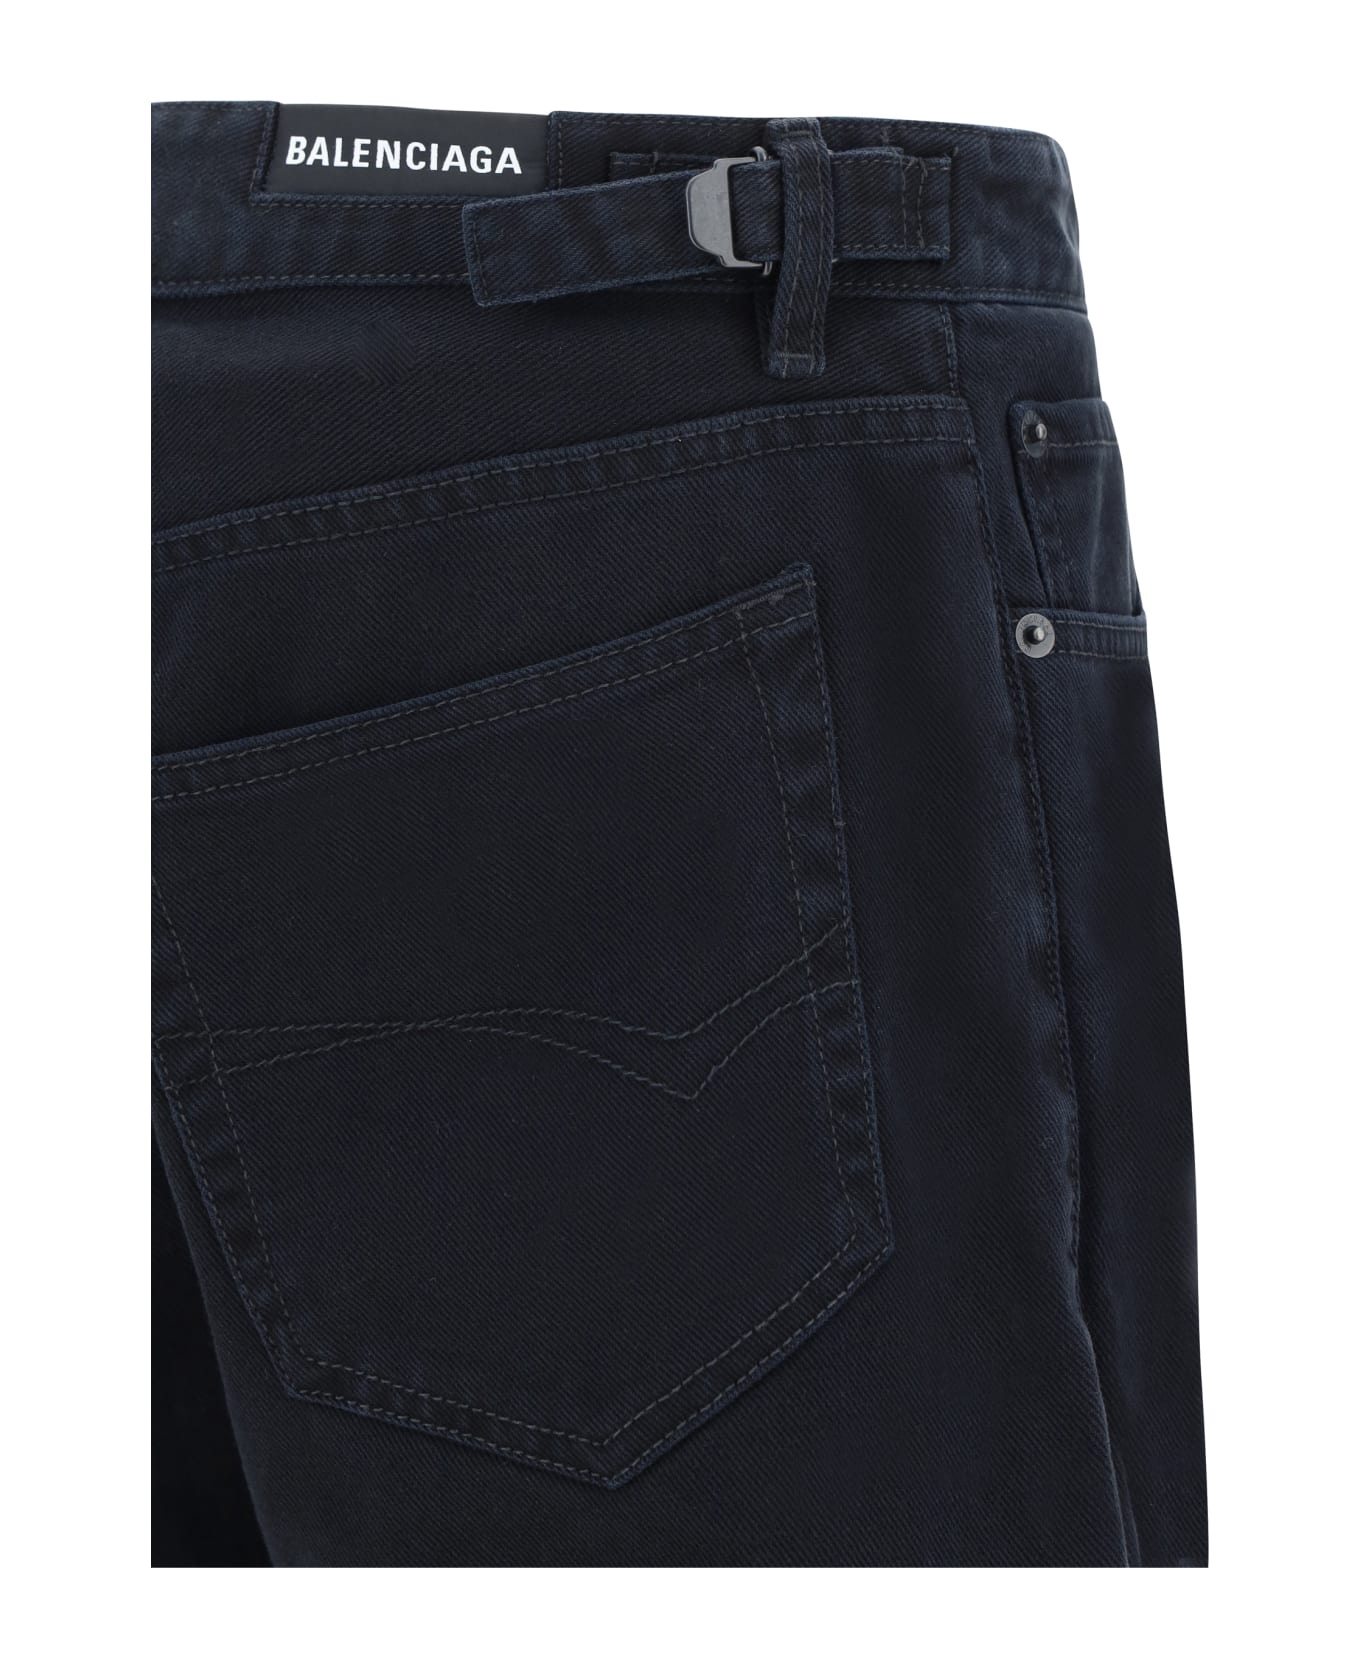 Balenciaga Broken Denim Jeans - black